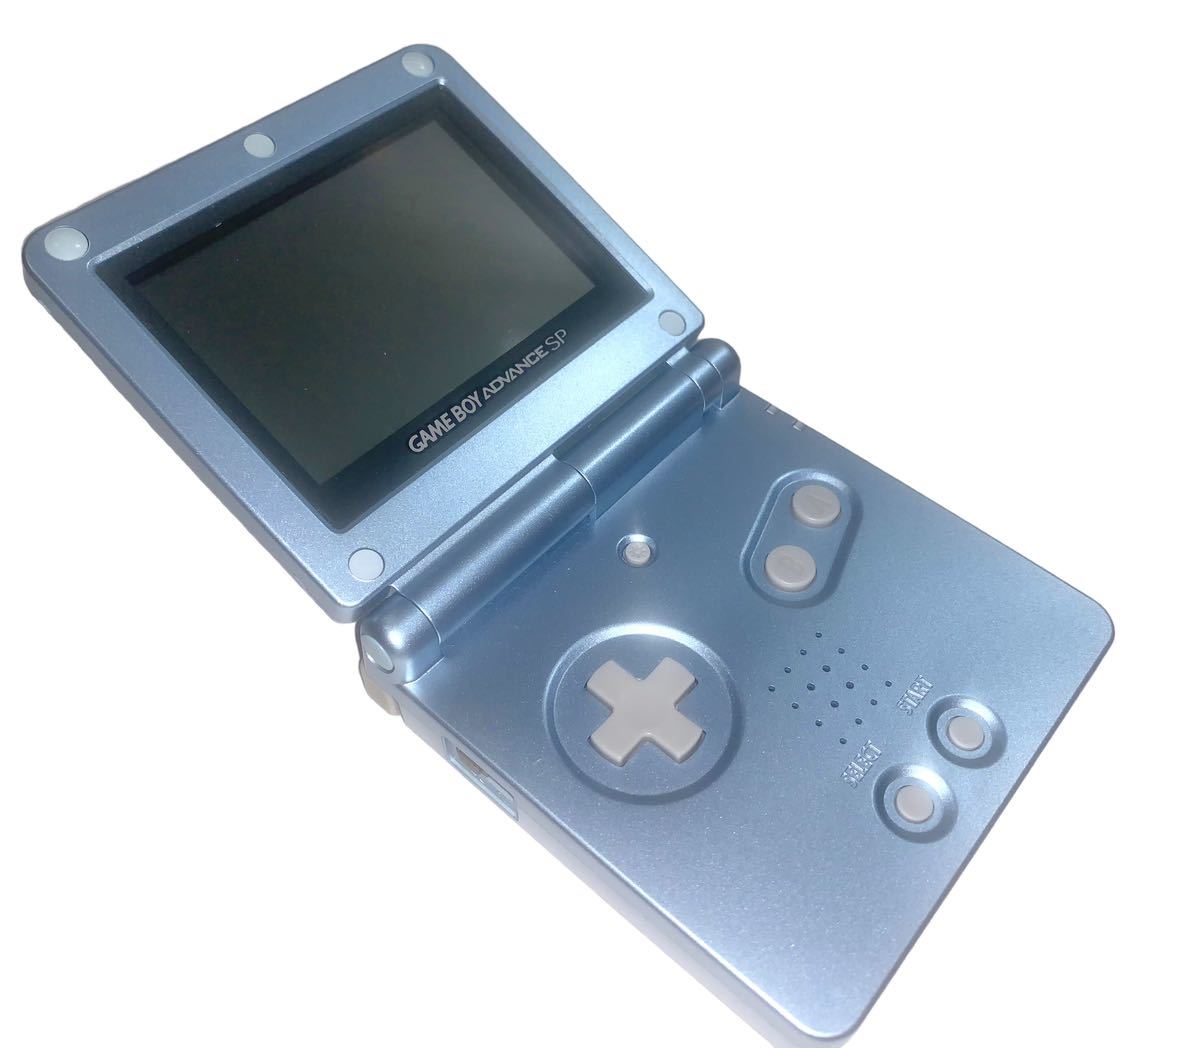  Game Boy Advance SP body pearl blue 